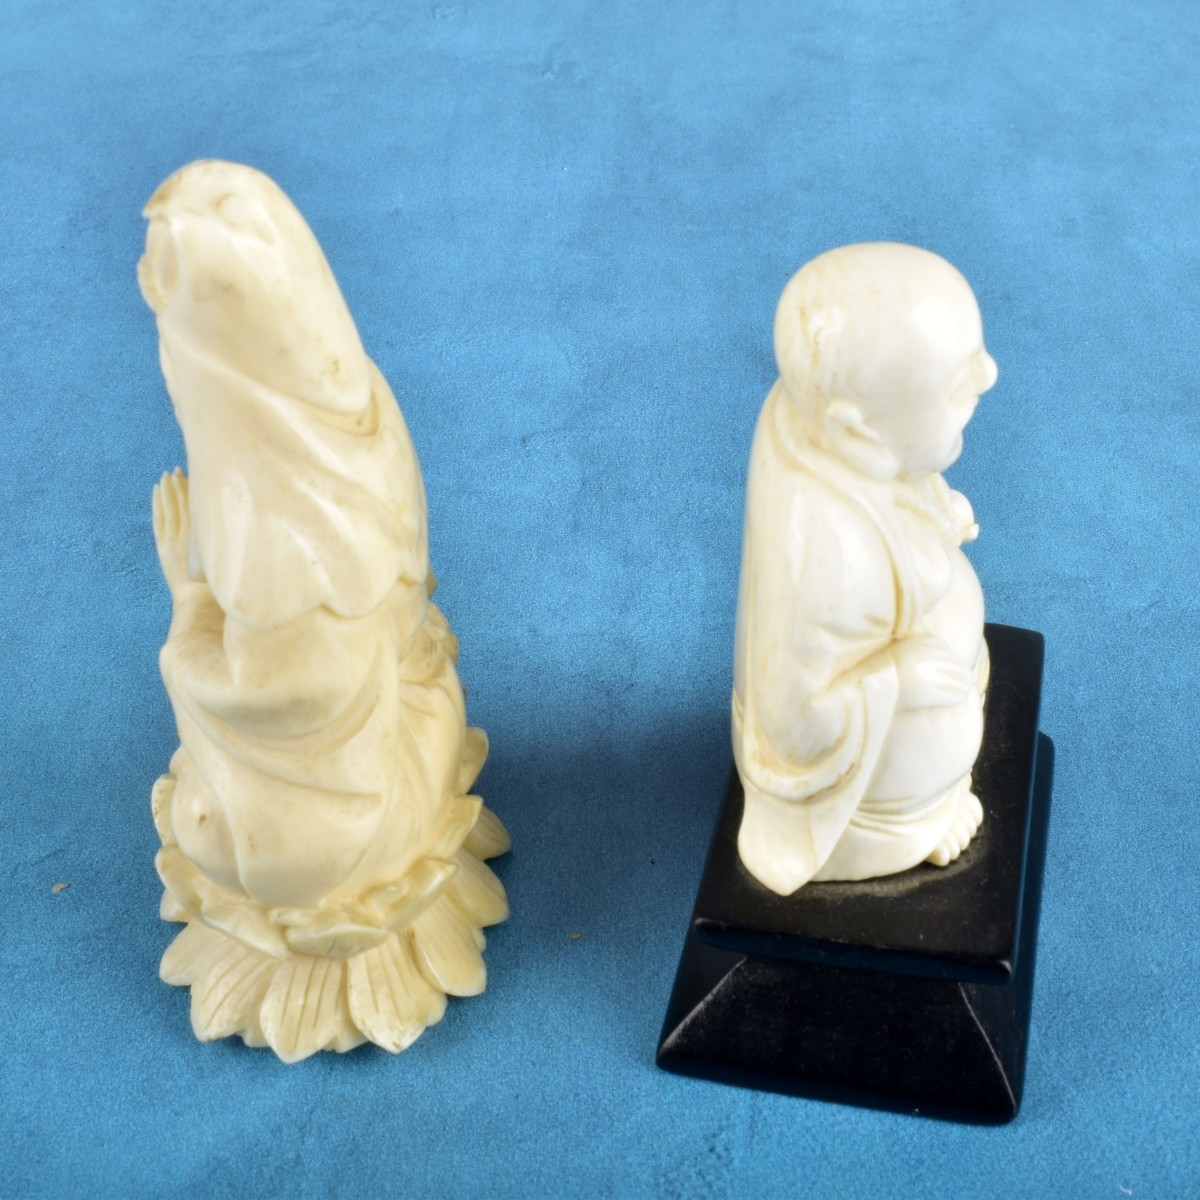 Two Antique Oriental Miniature Figurines